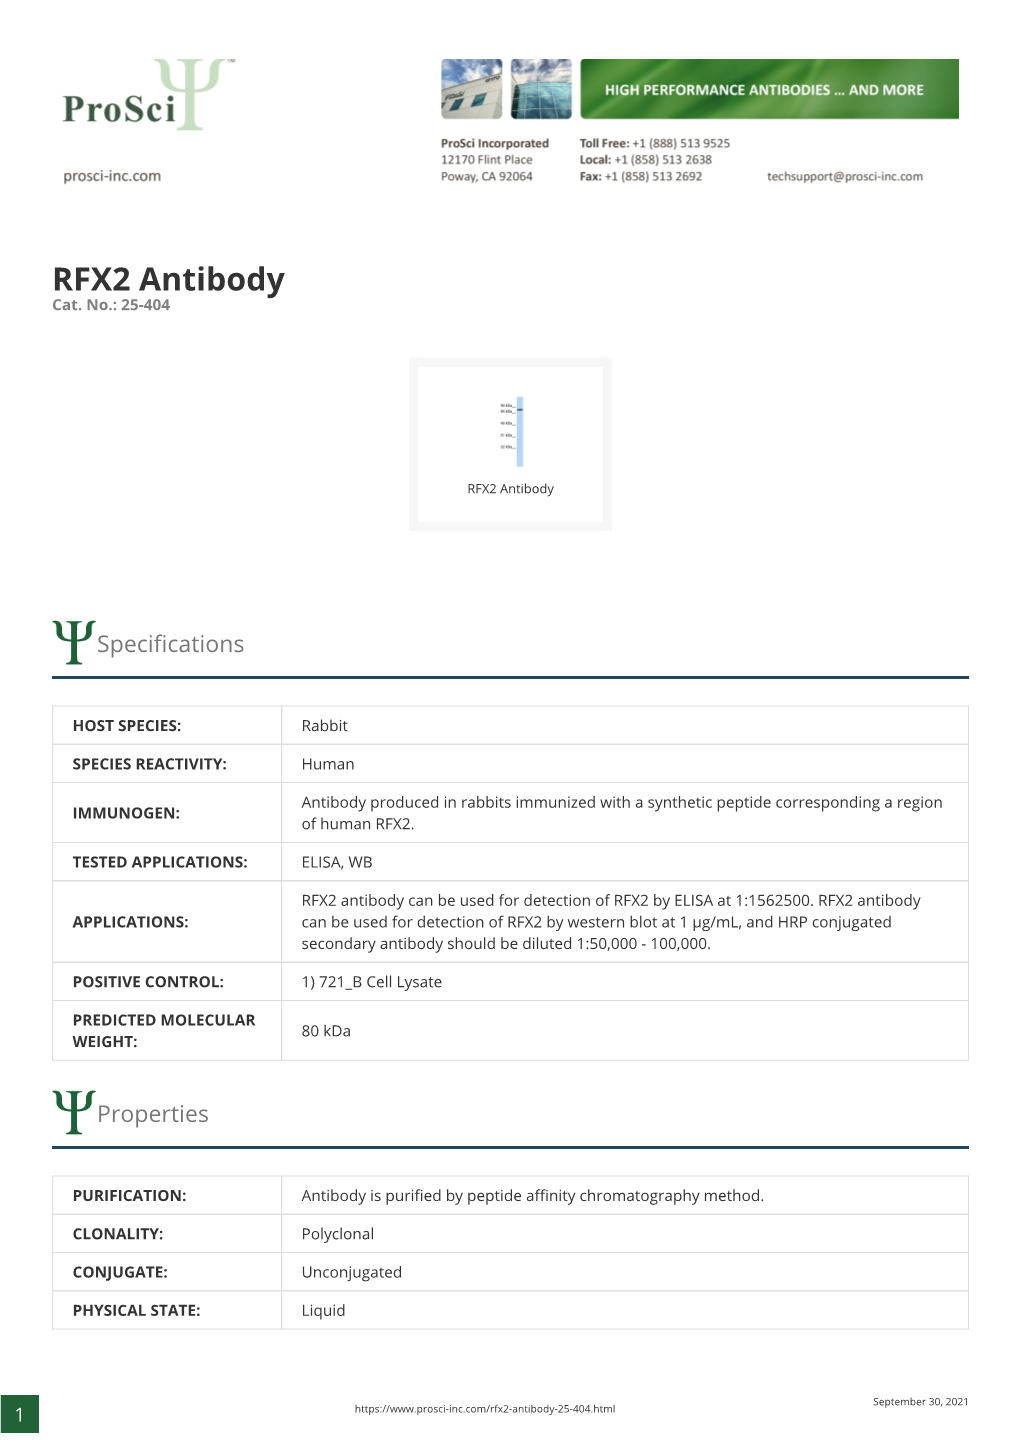 RFX2 Antibody Cat